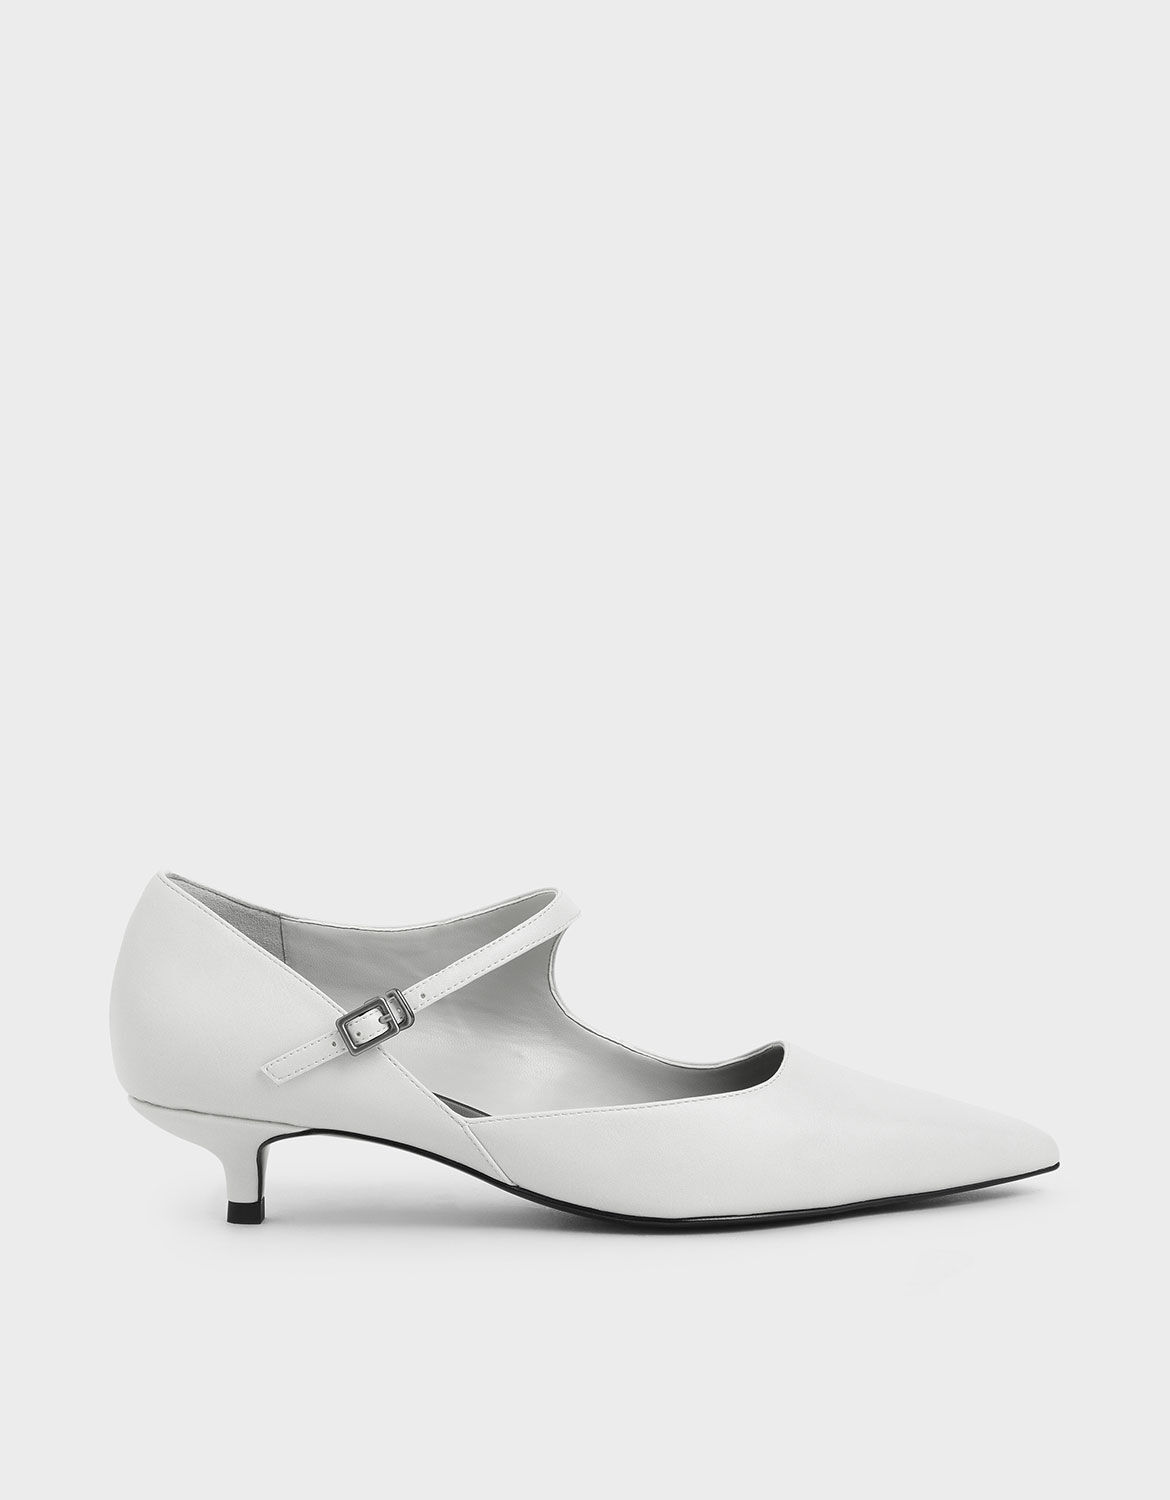 white pointed toe kitten heels